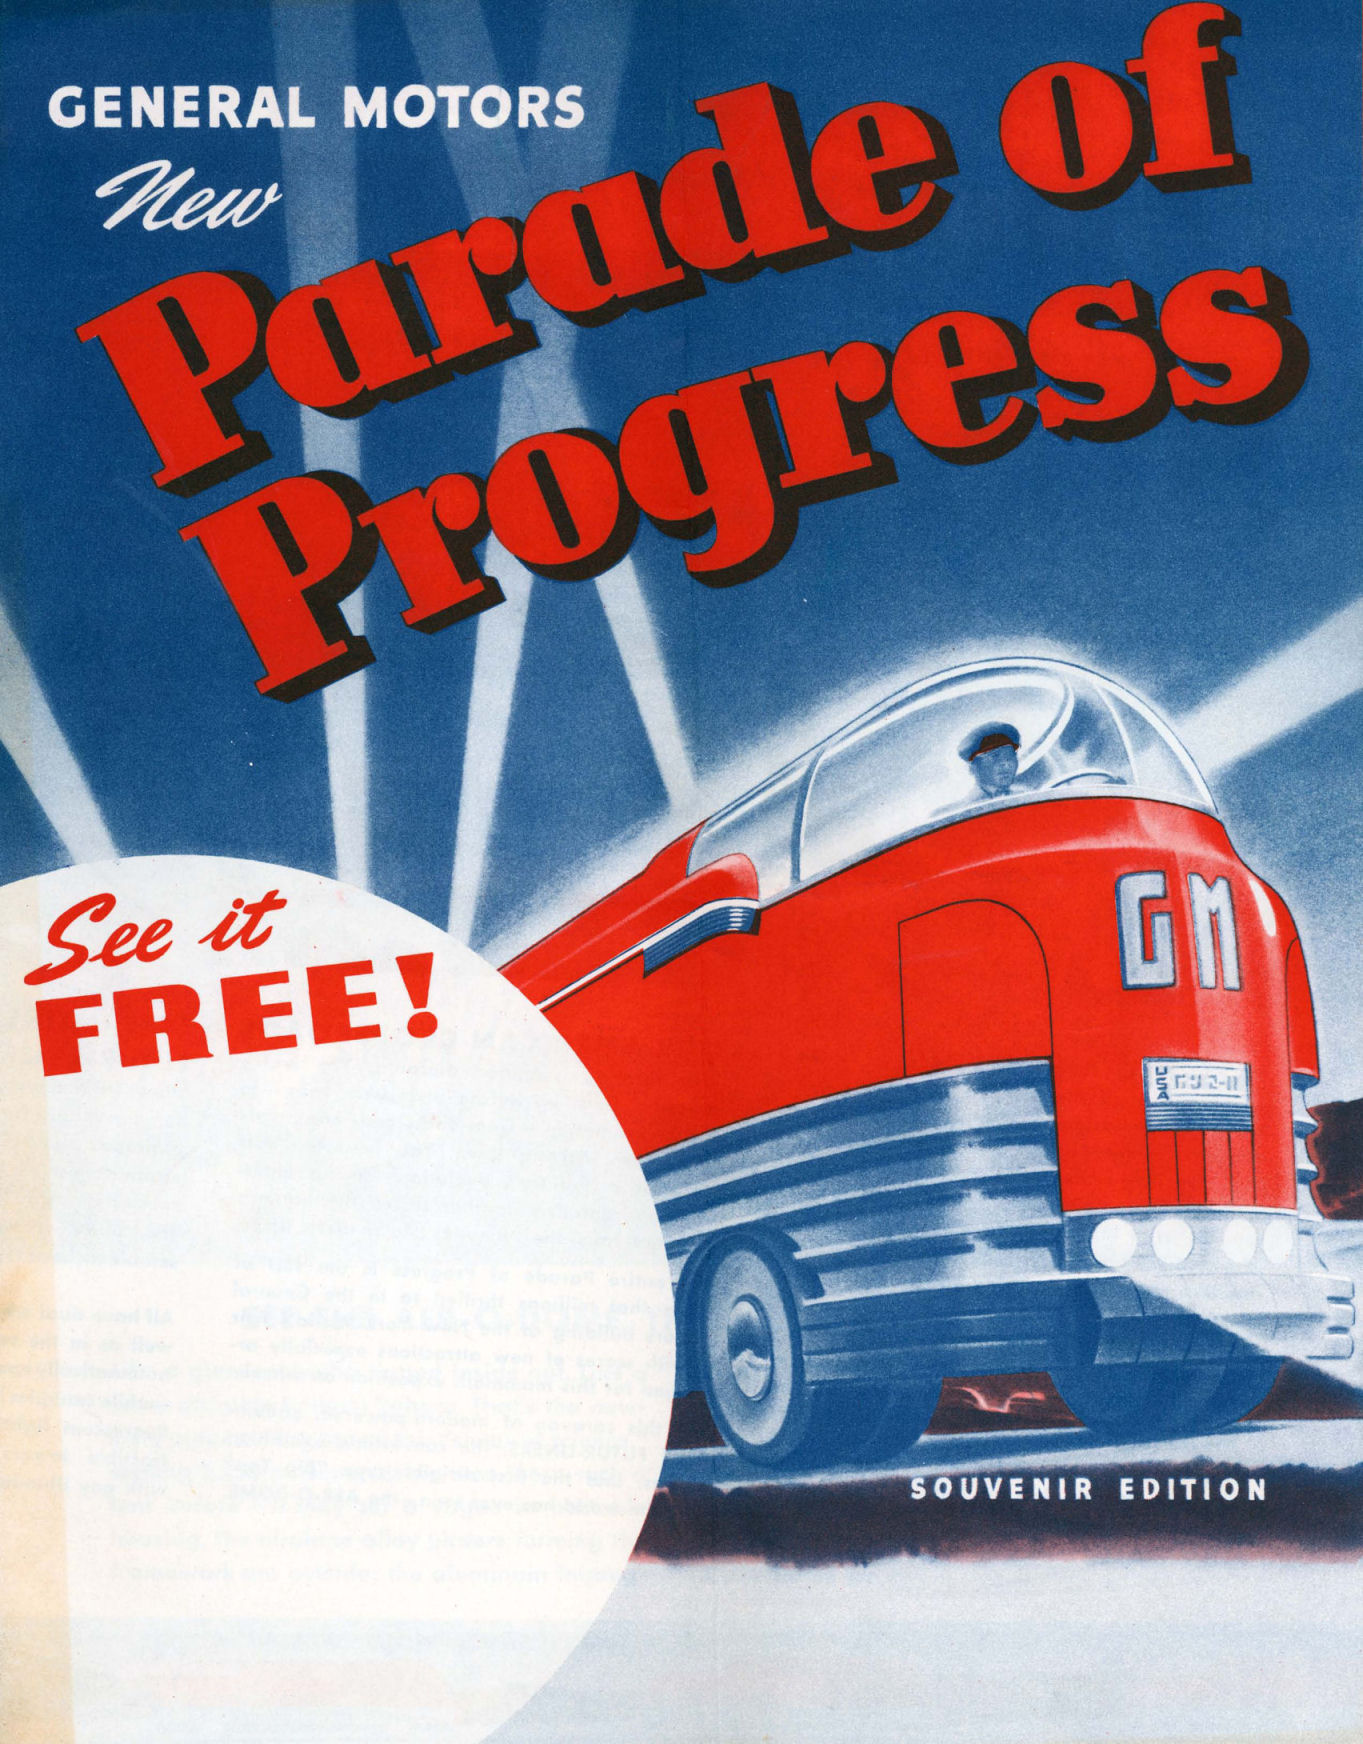 1953_GM_Parade_of__Progress-01